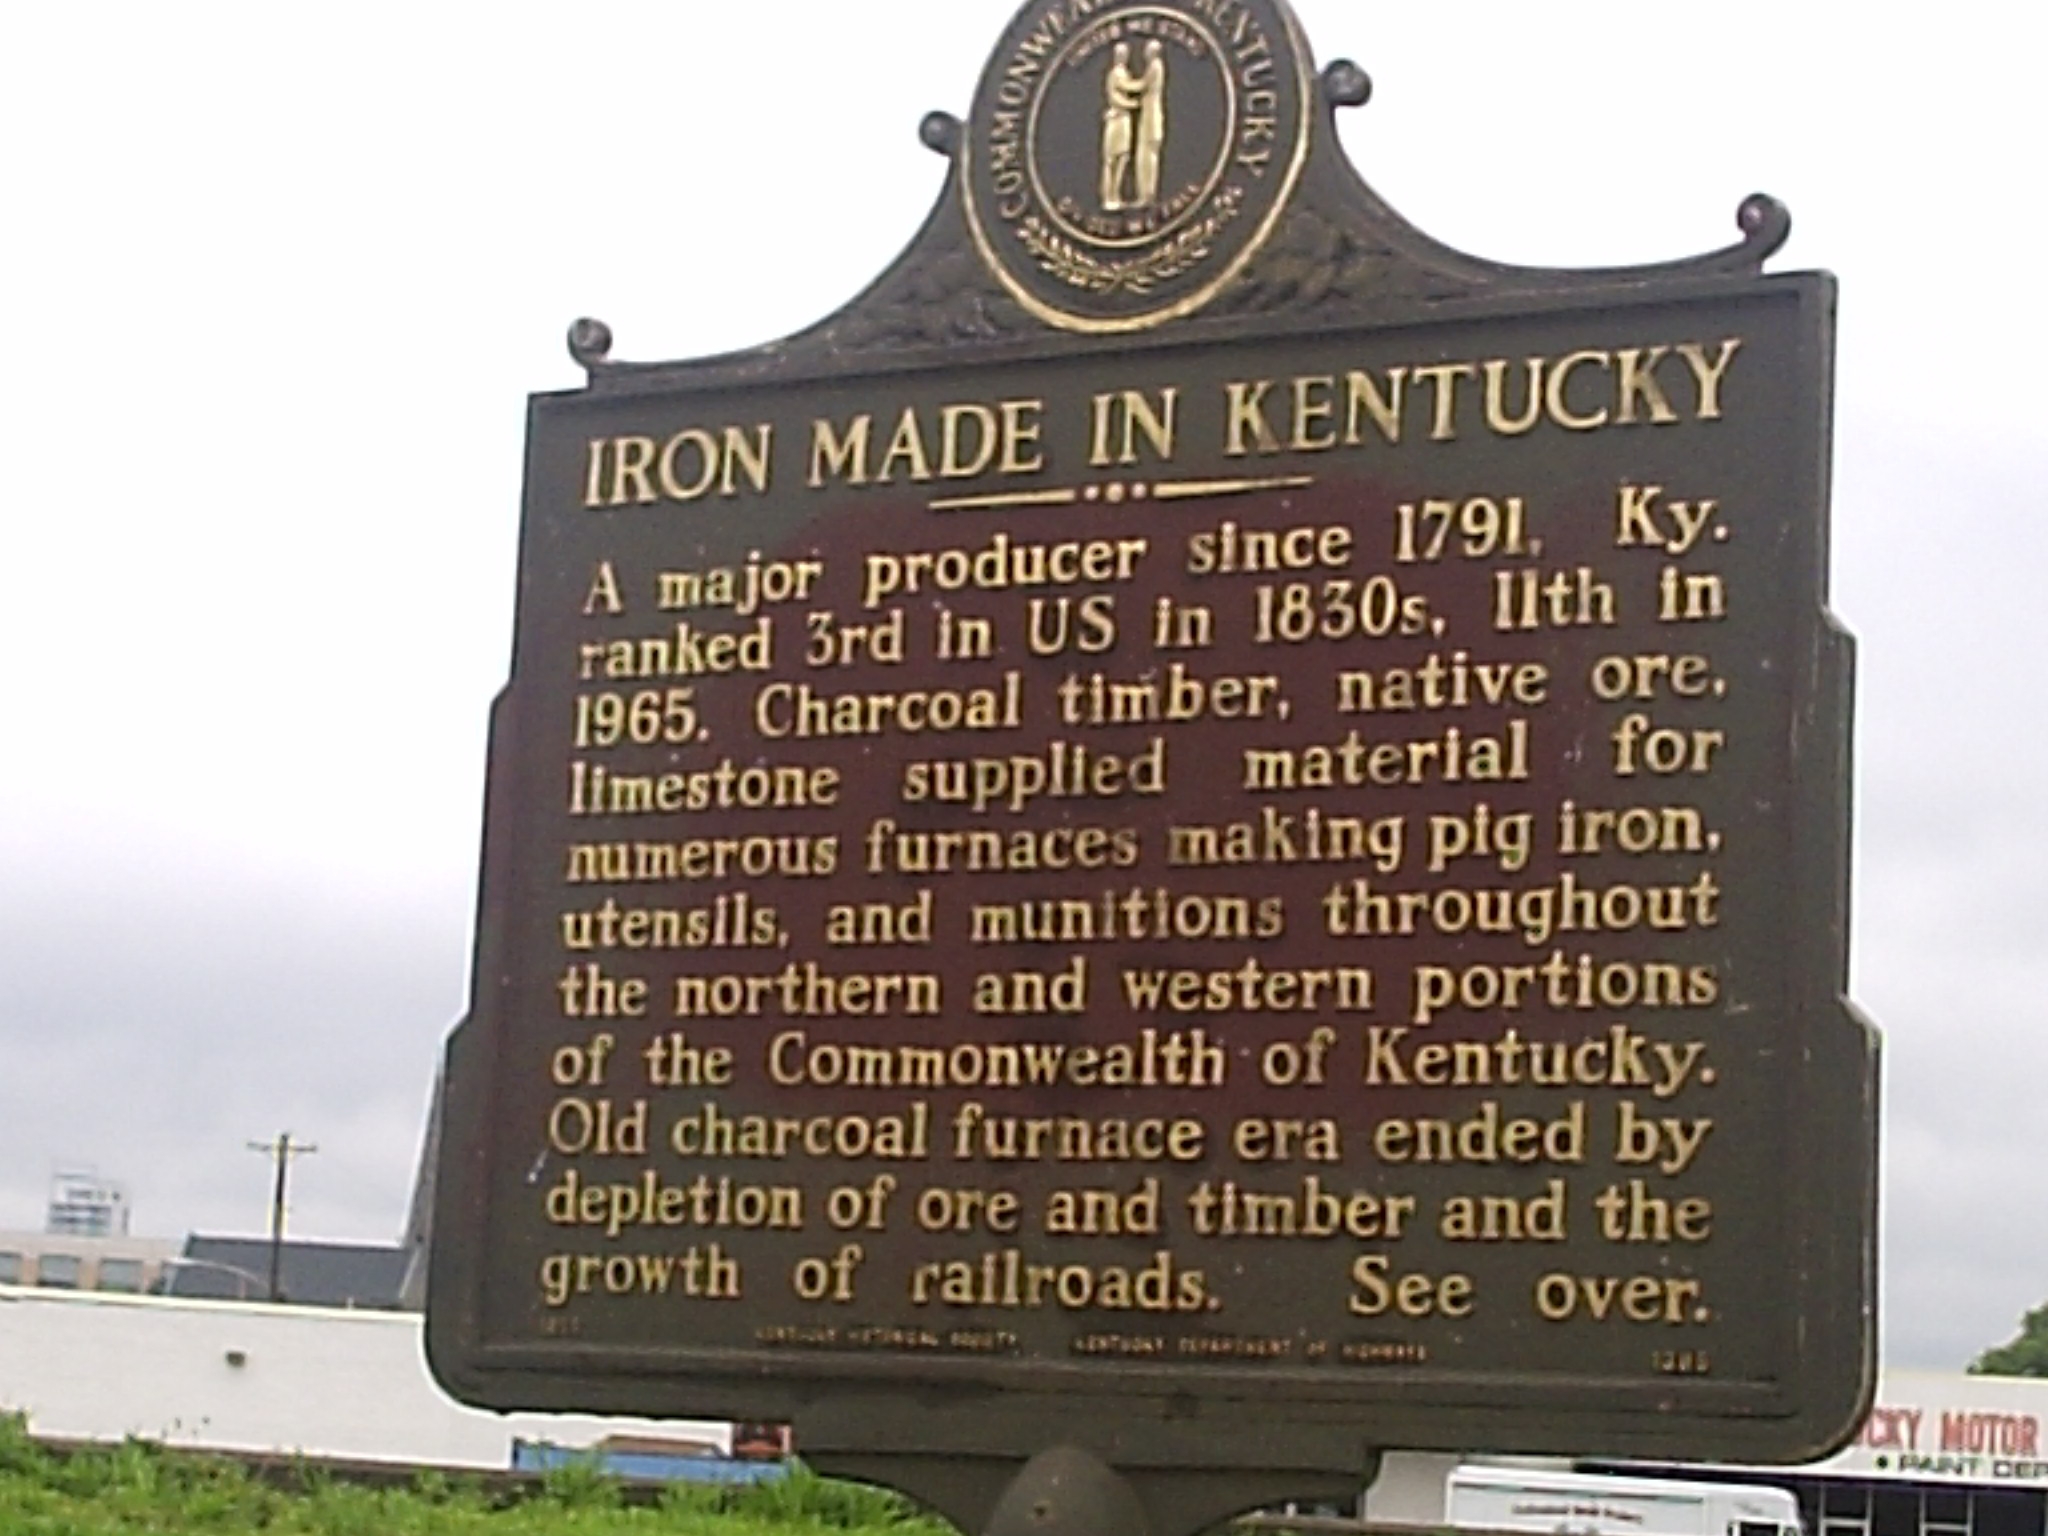 Licking Furnace/Iron Made in Kentucky Marker